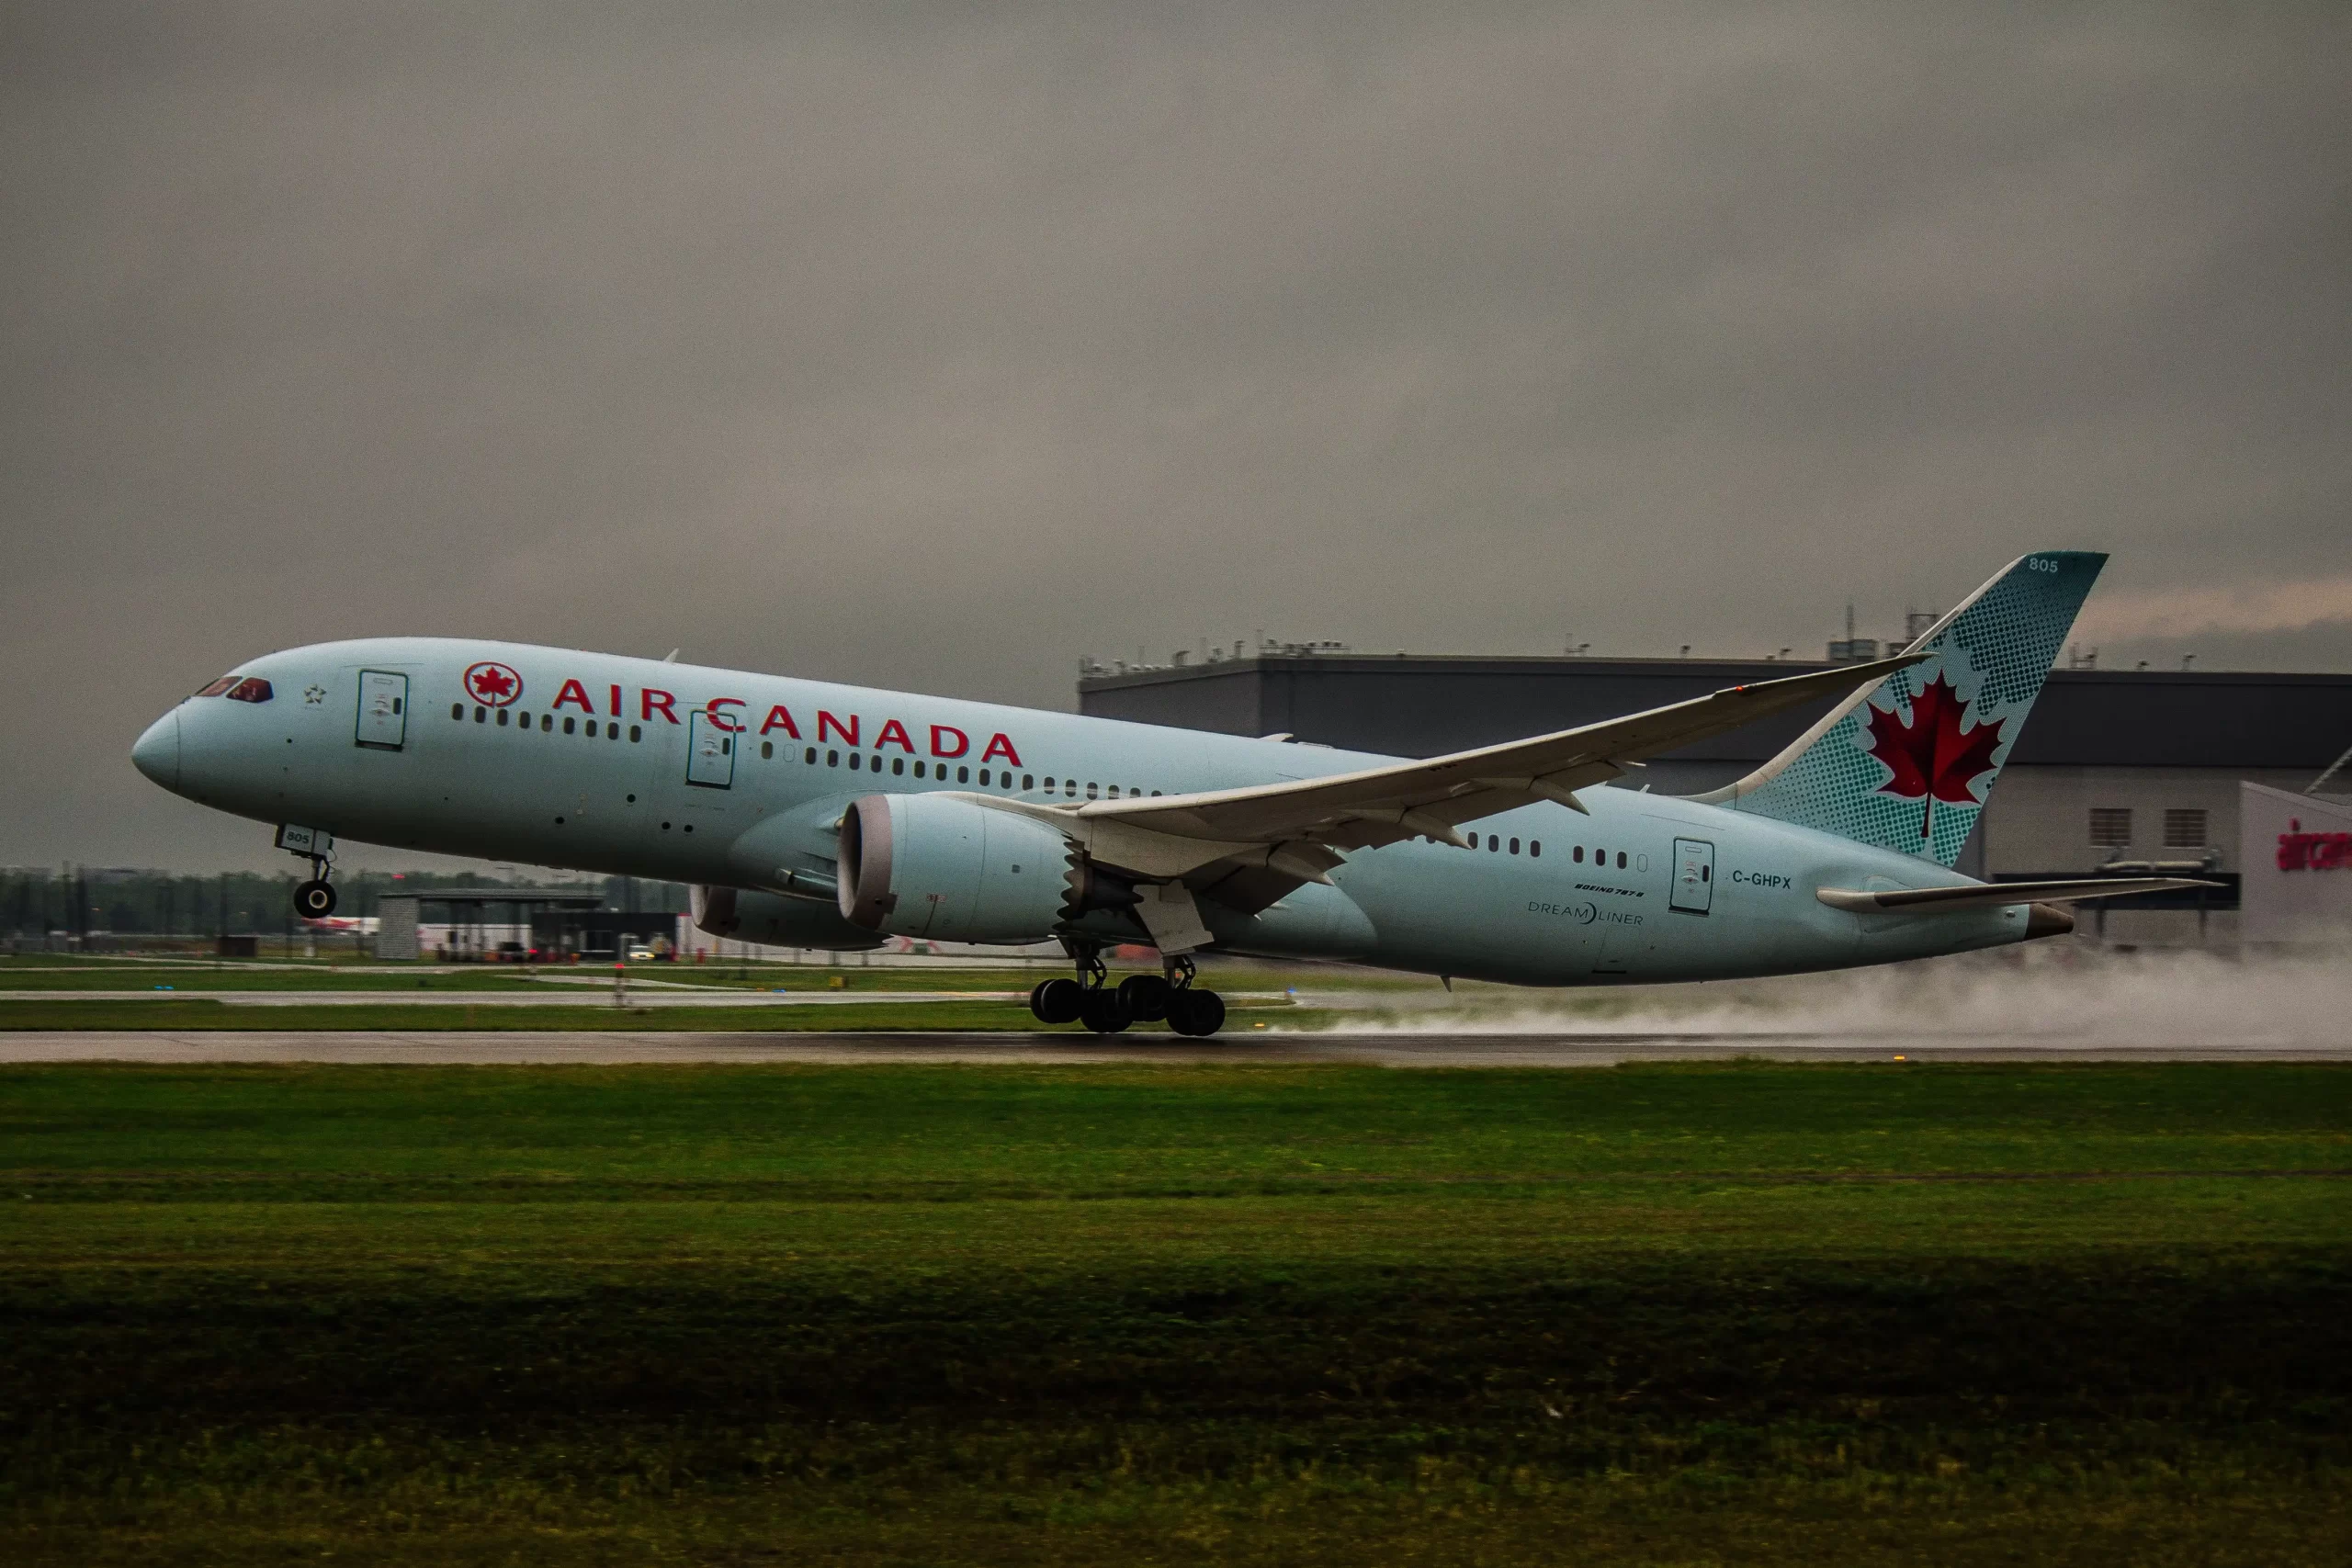 Air Canada plane taking off